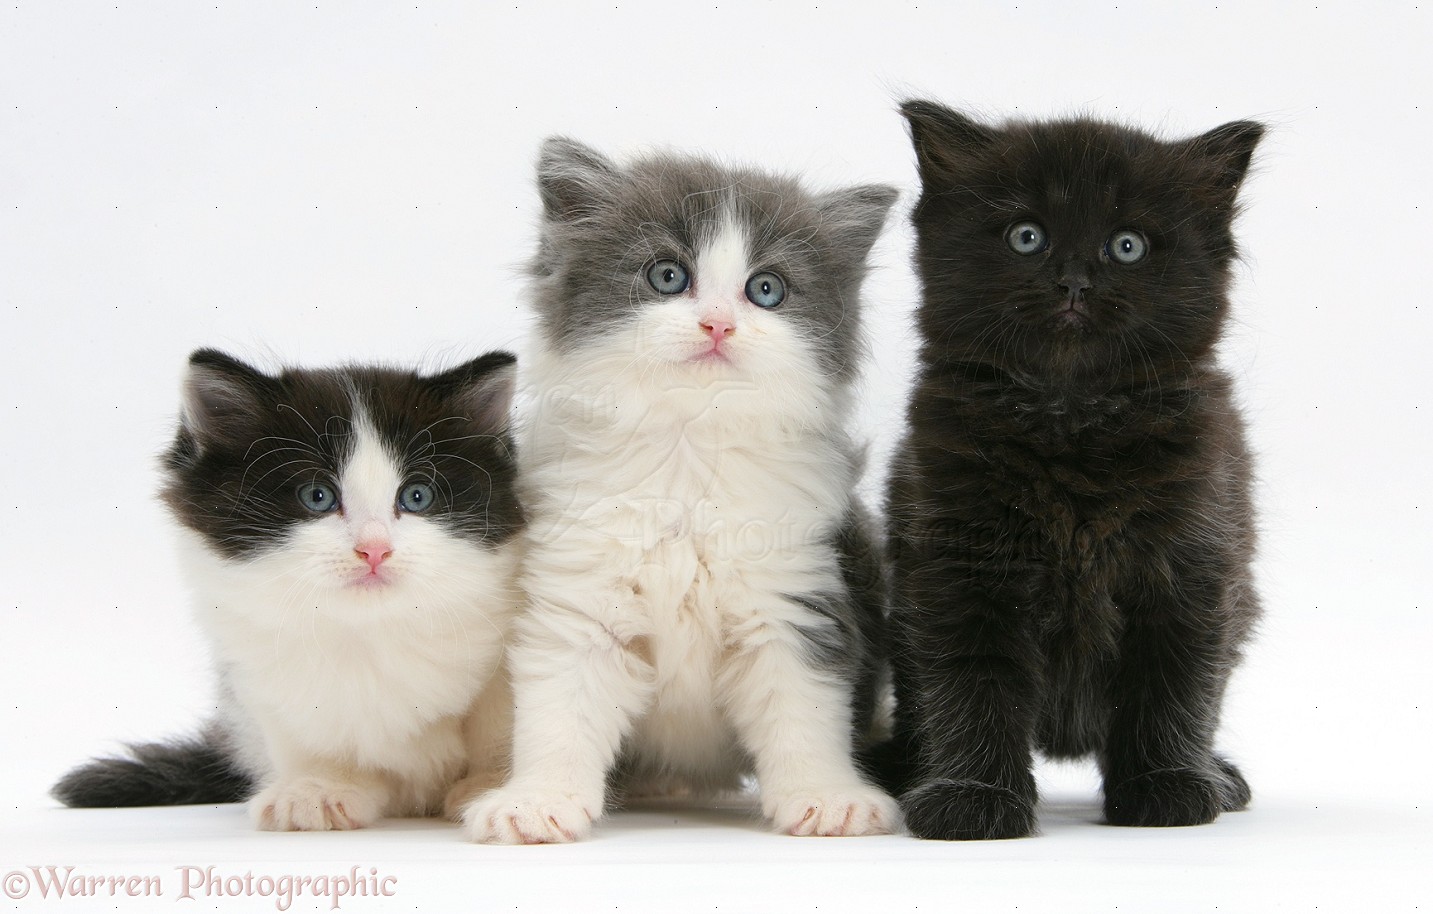 Three cute kittens photo - WP23086